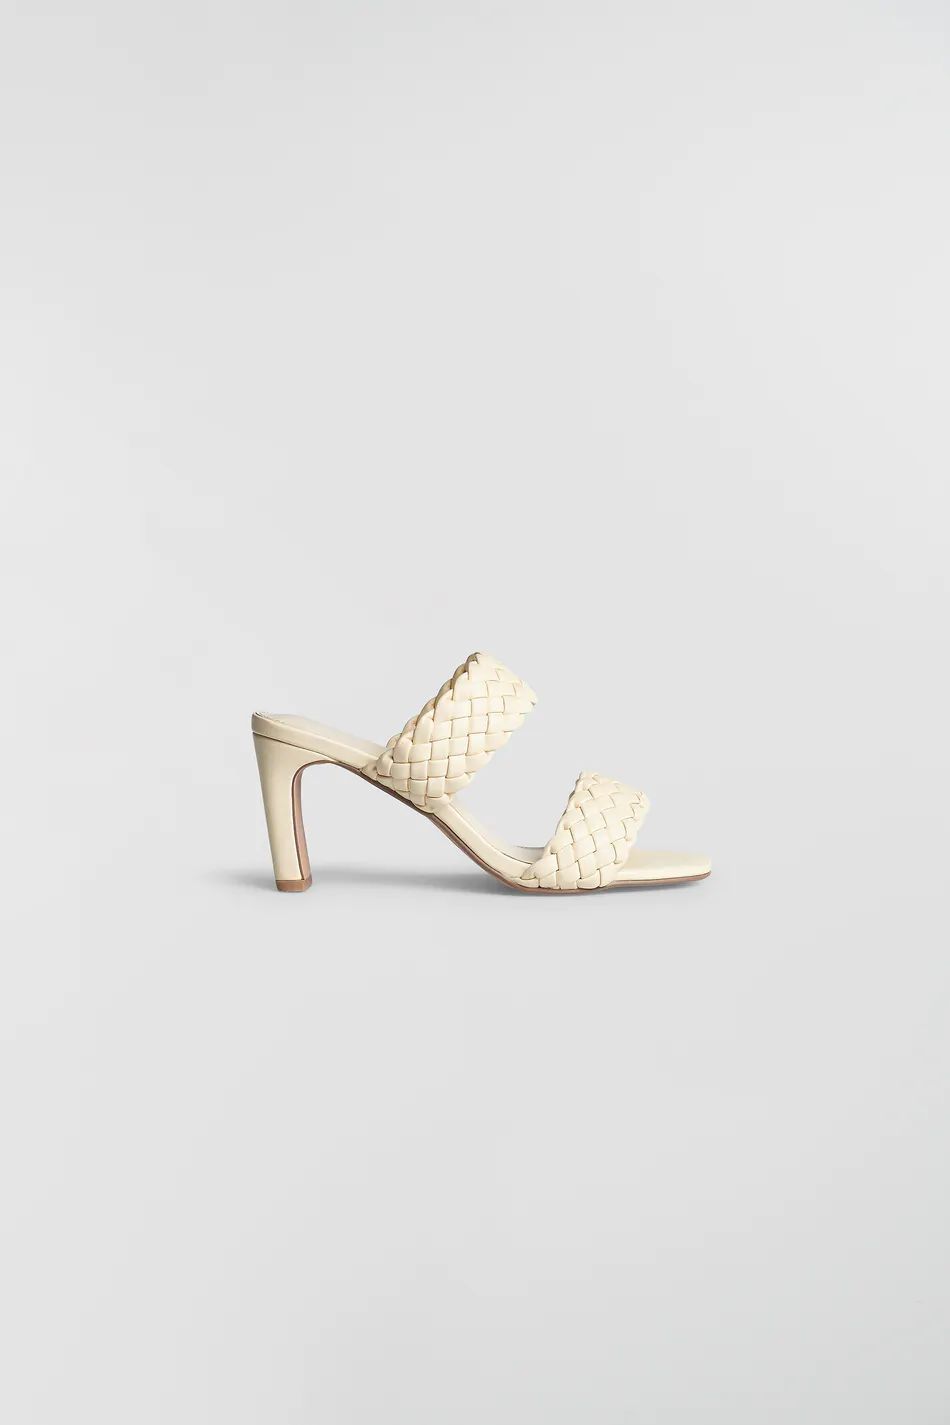 Rachel high heel sandals - schuhe - Gina Tricot | Gina Tricot SE